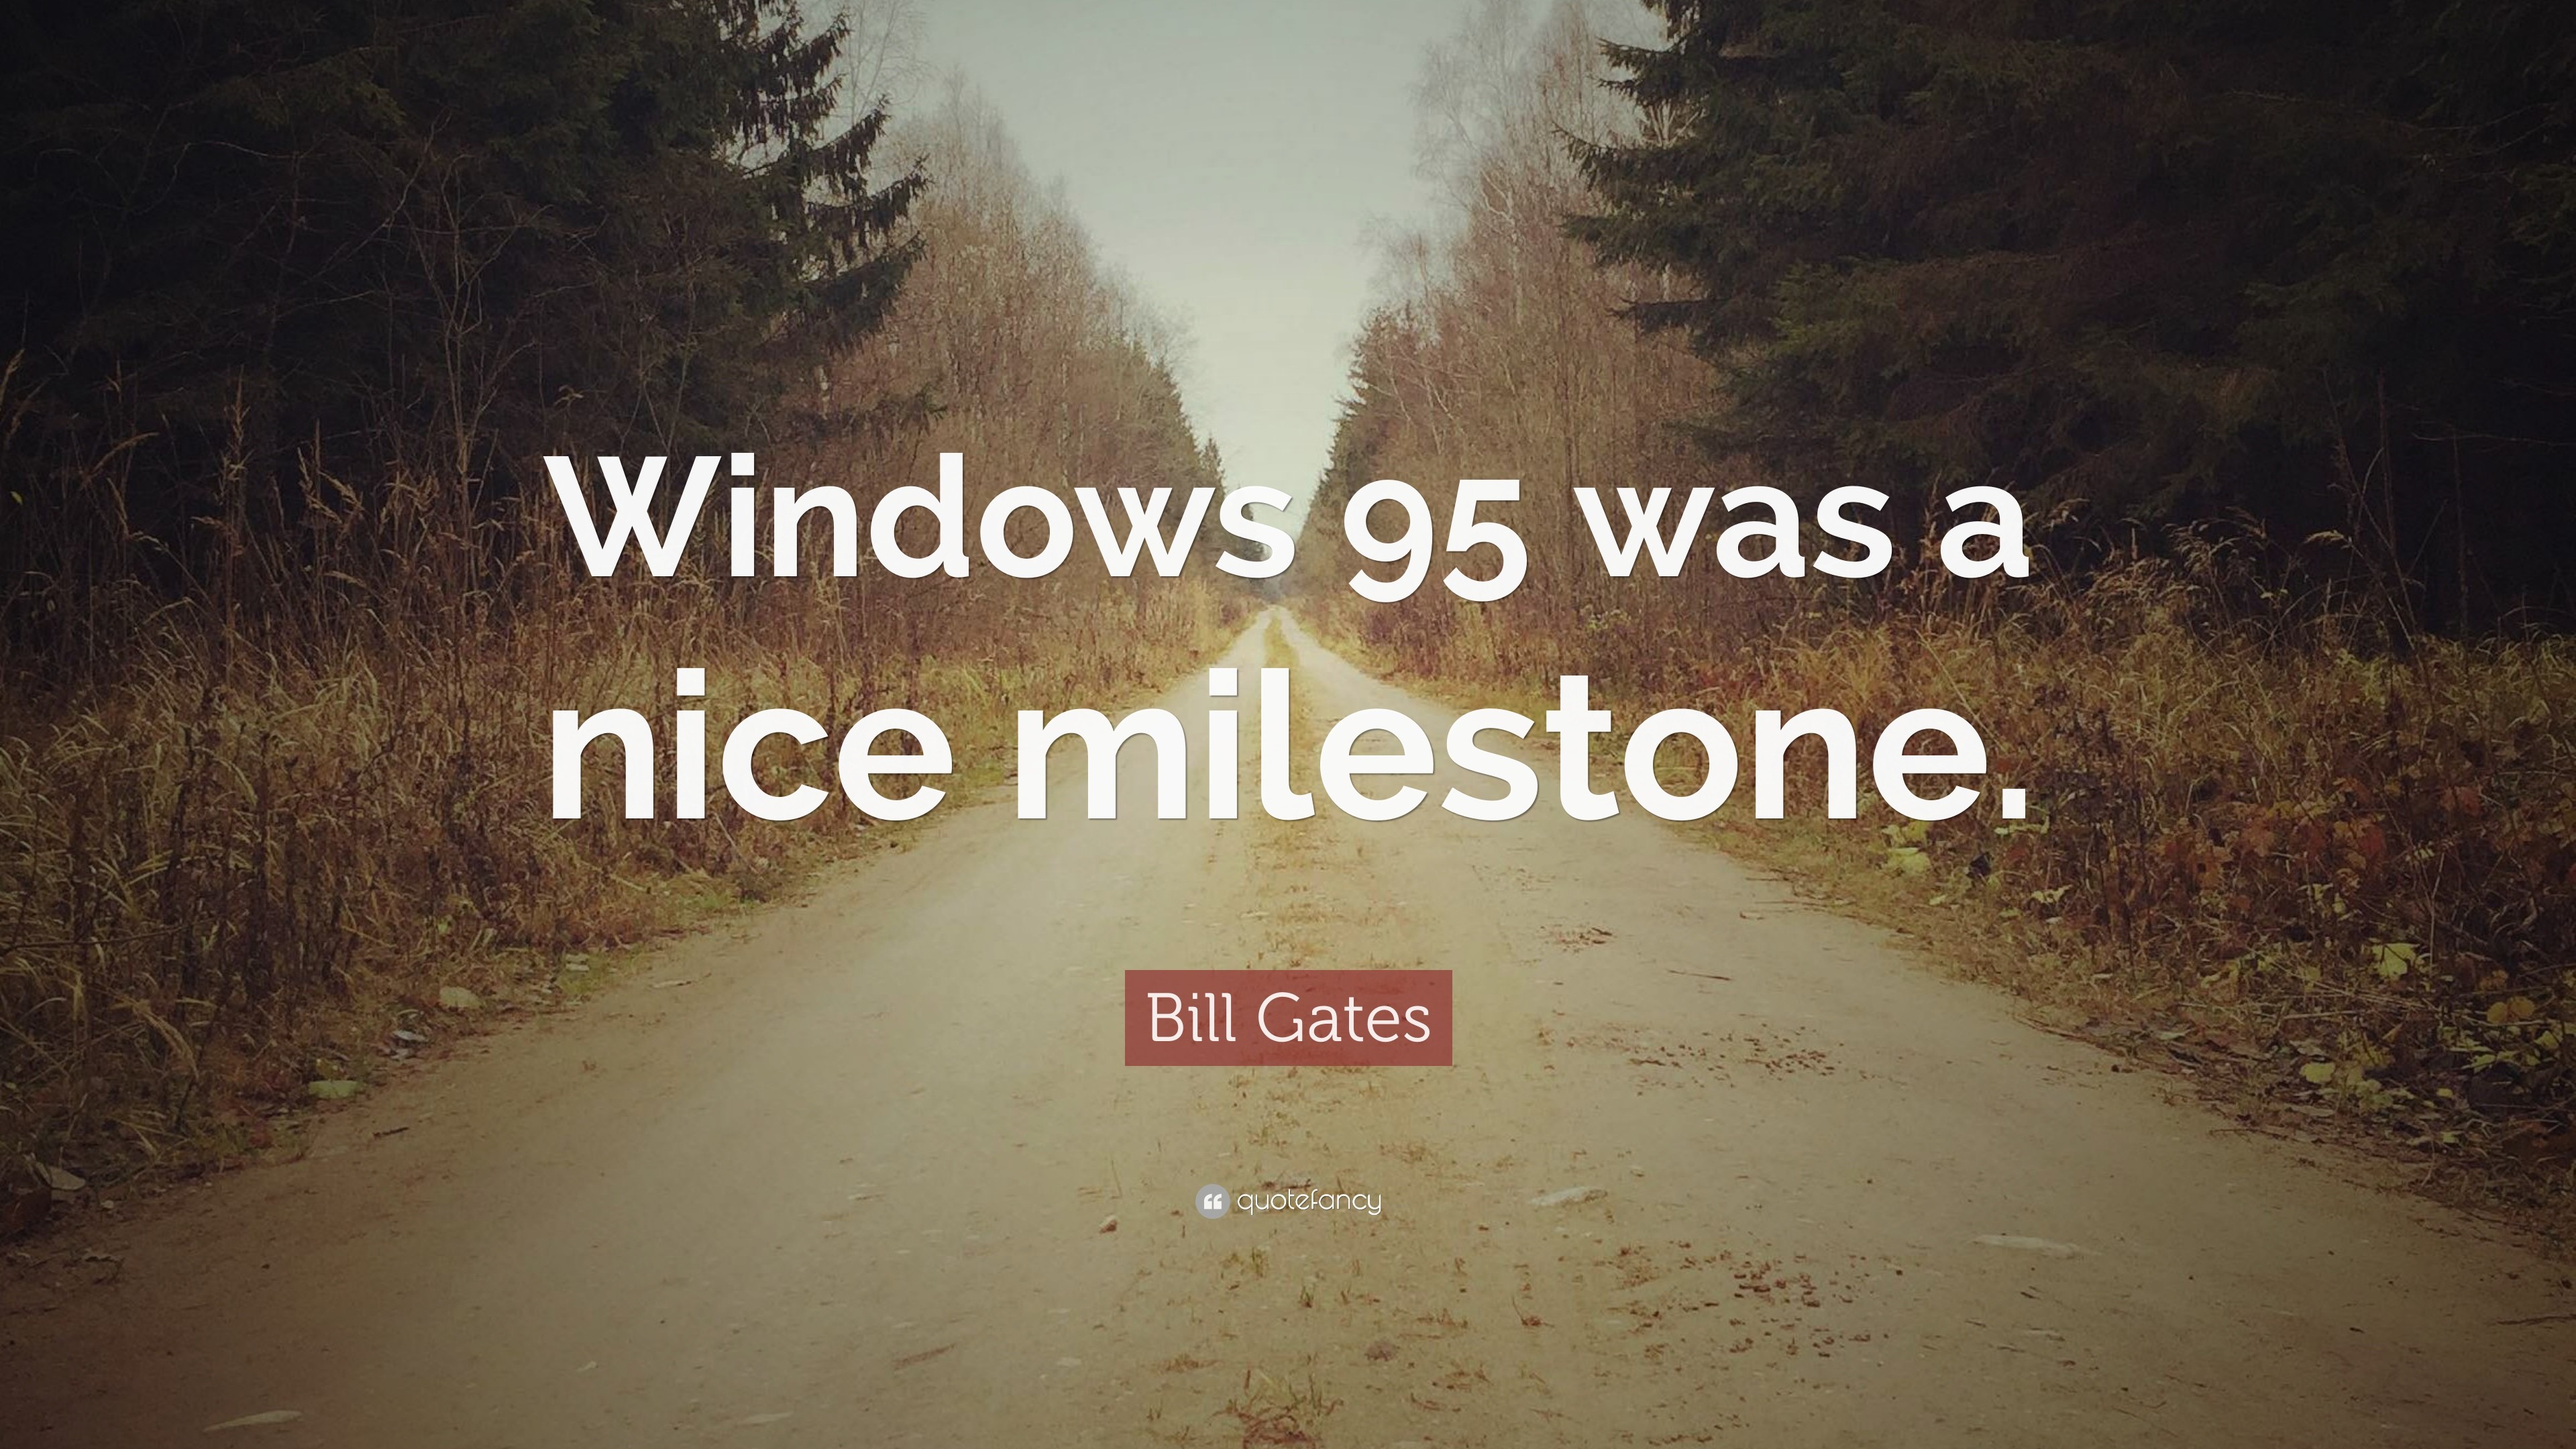 3840x2160 Bill Gates Quote: “Windows 95 was a nice milestone.”